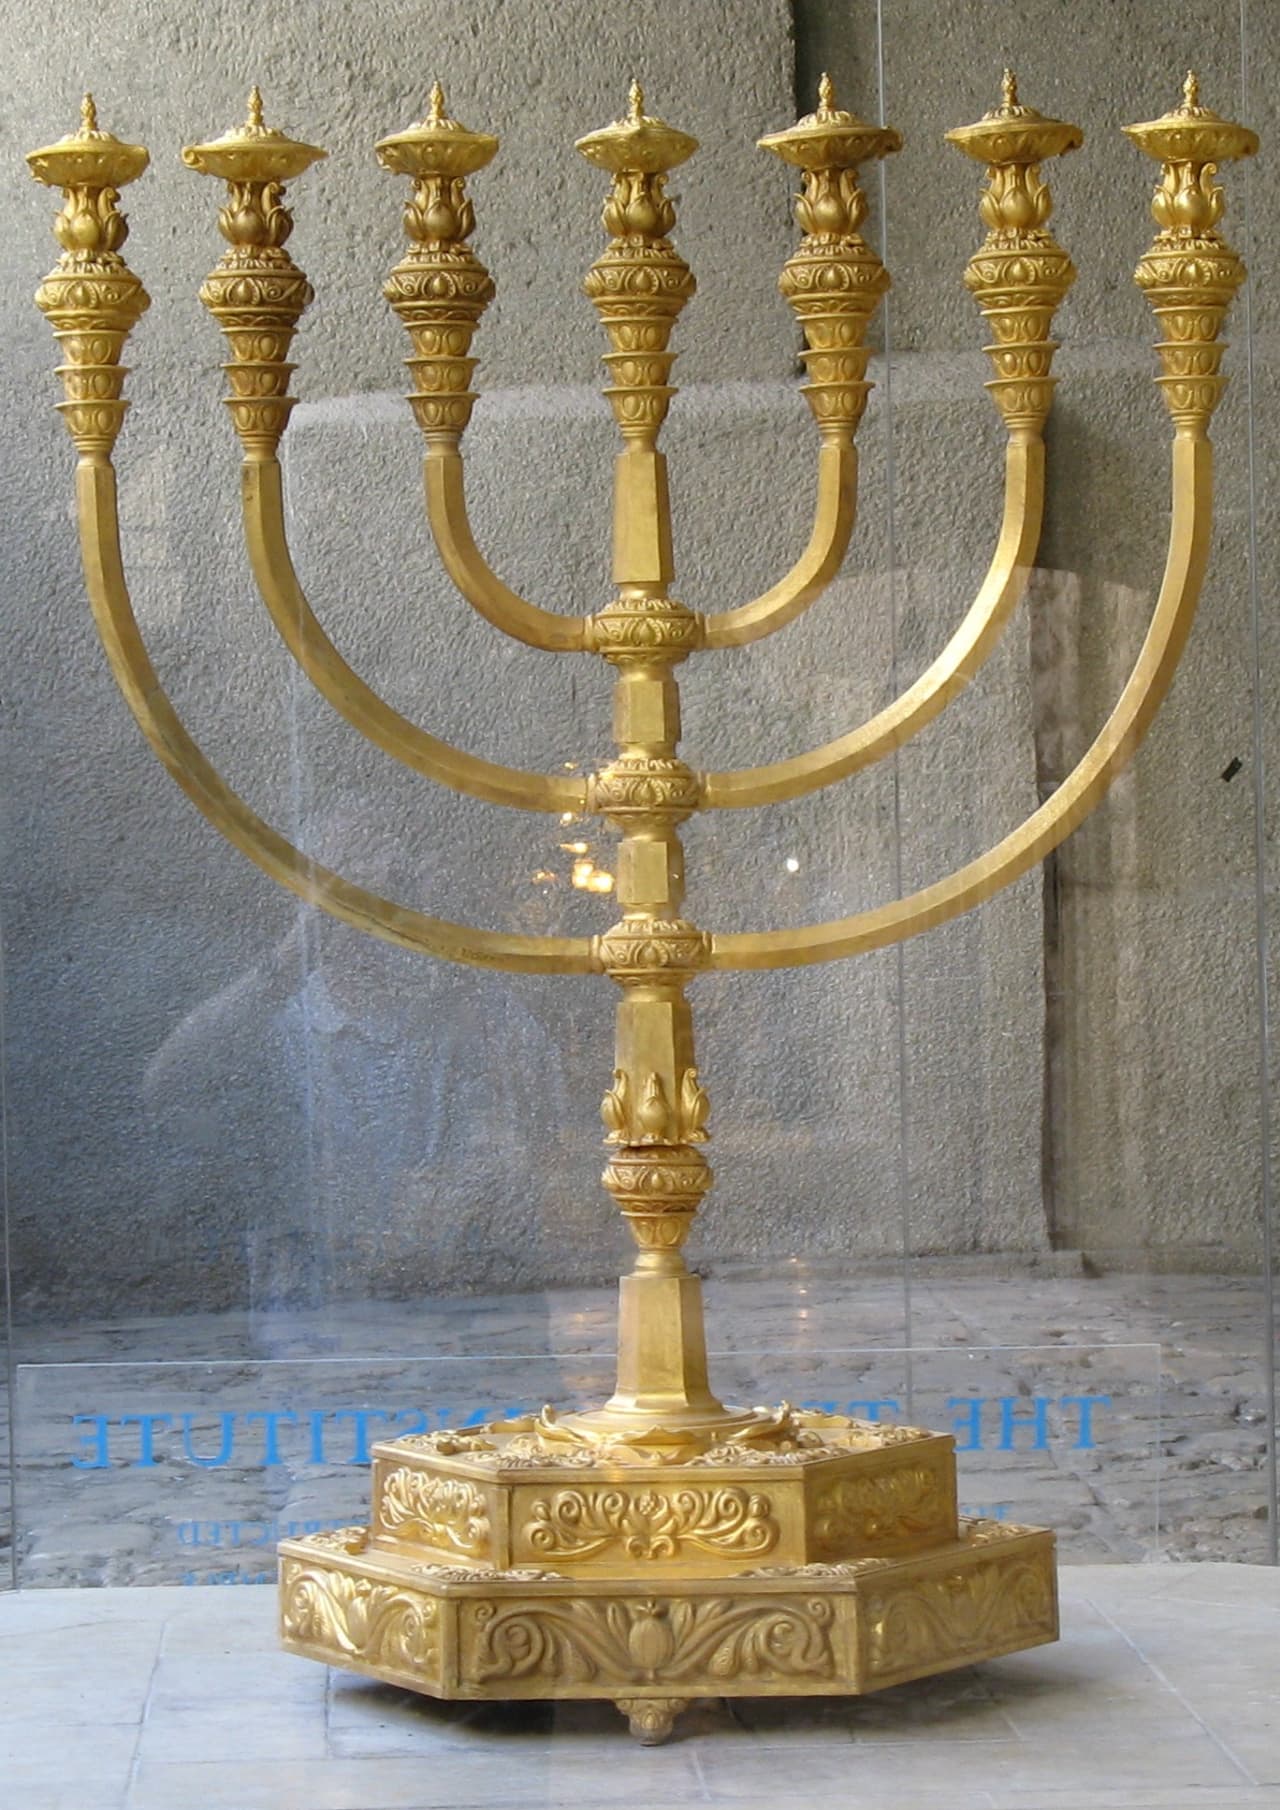  Chabad Briarcliff plans many Hanukkah events.